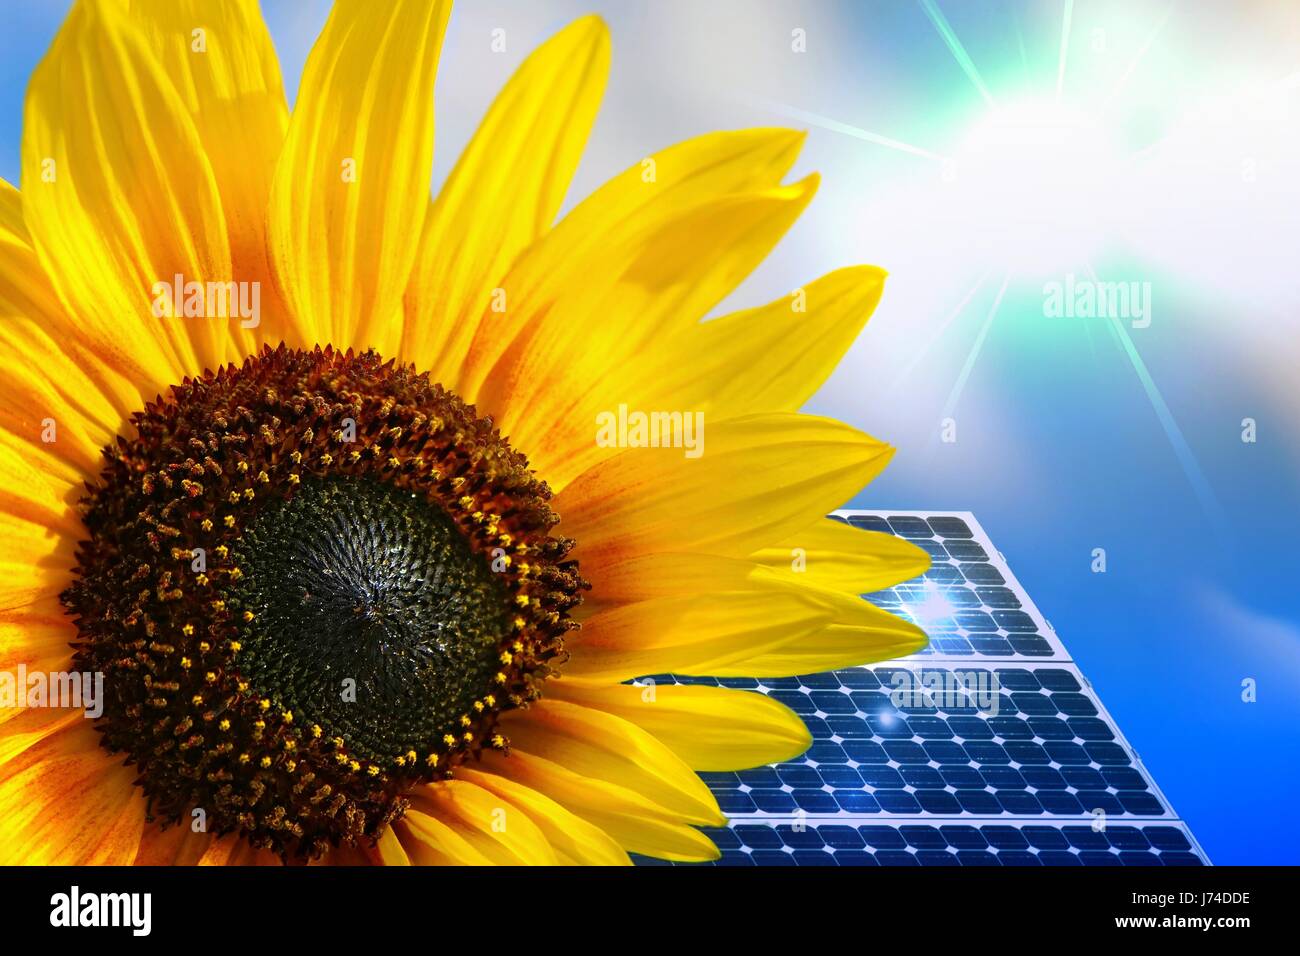 flower sunflower plant environmental protection energy industry solar energy Stock Photo